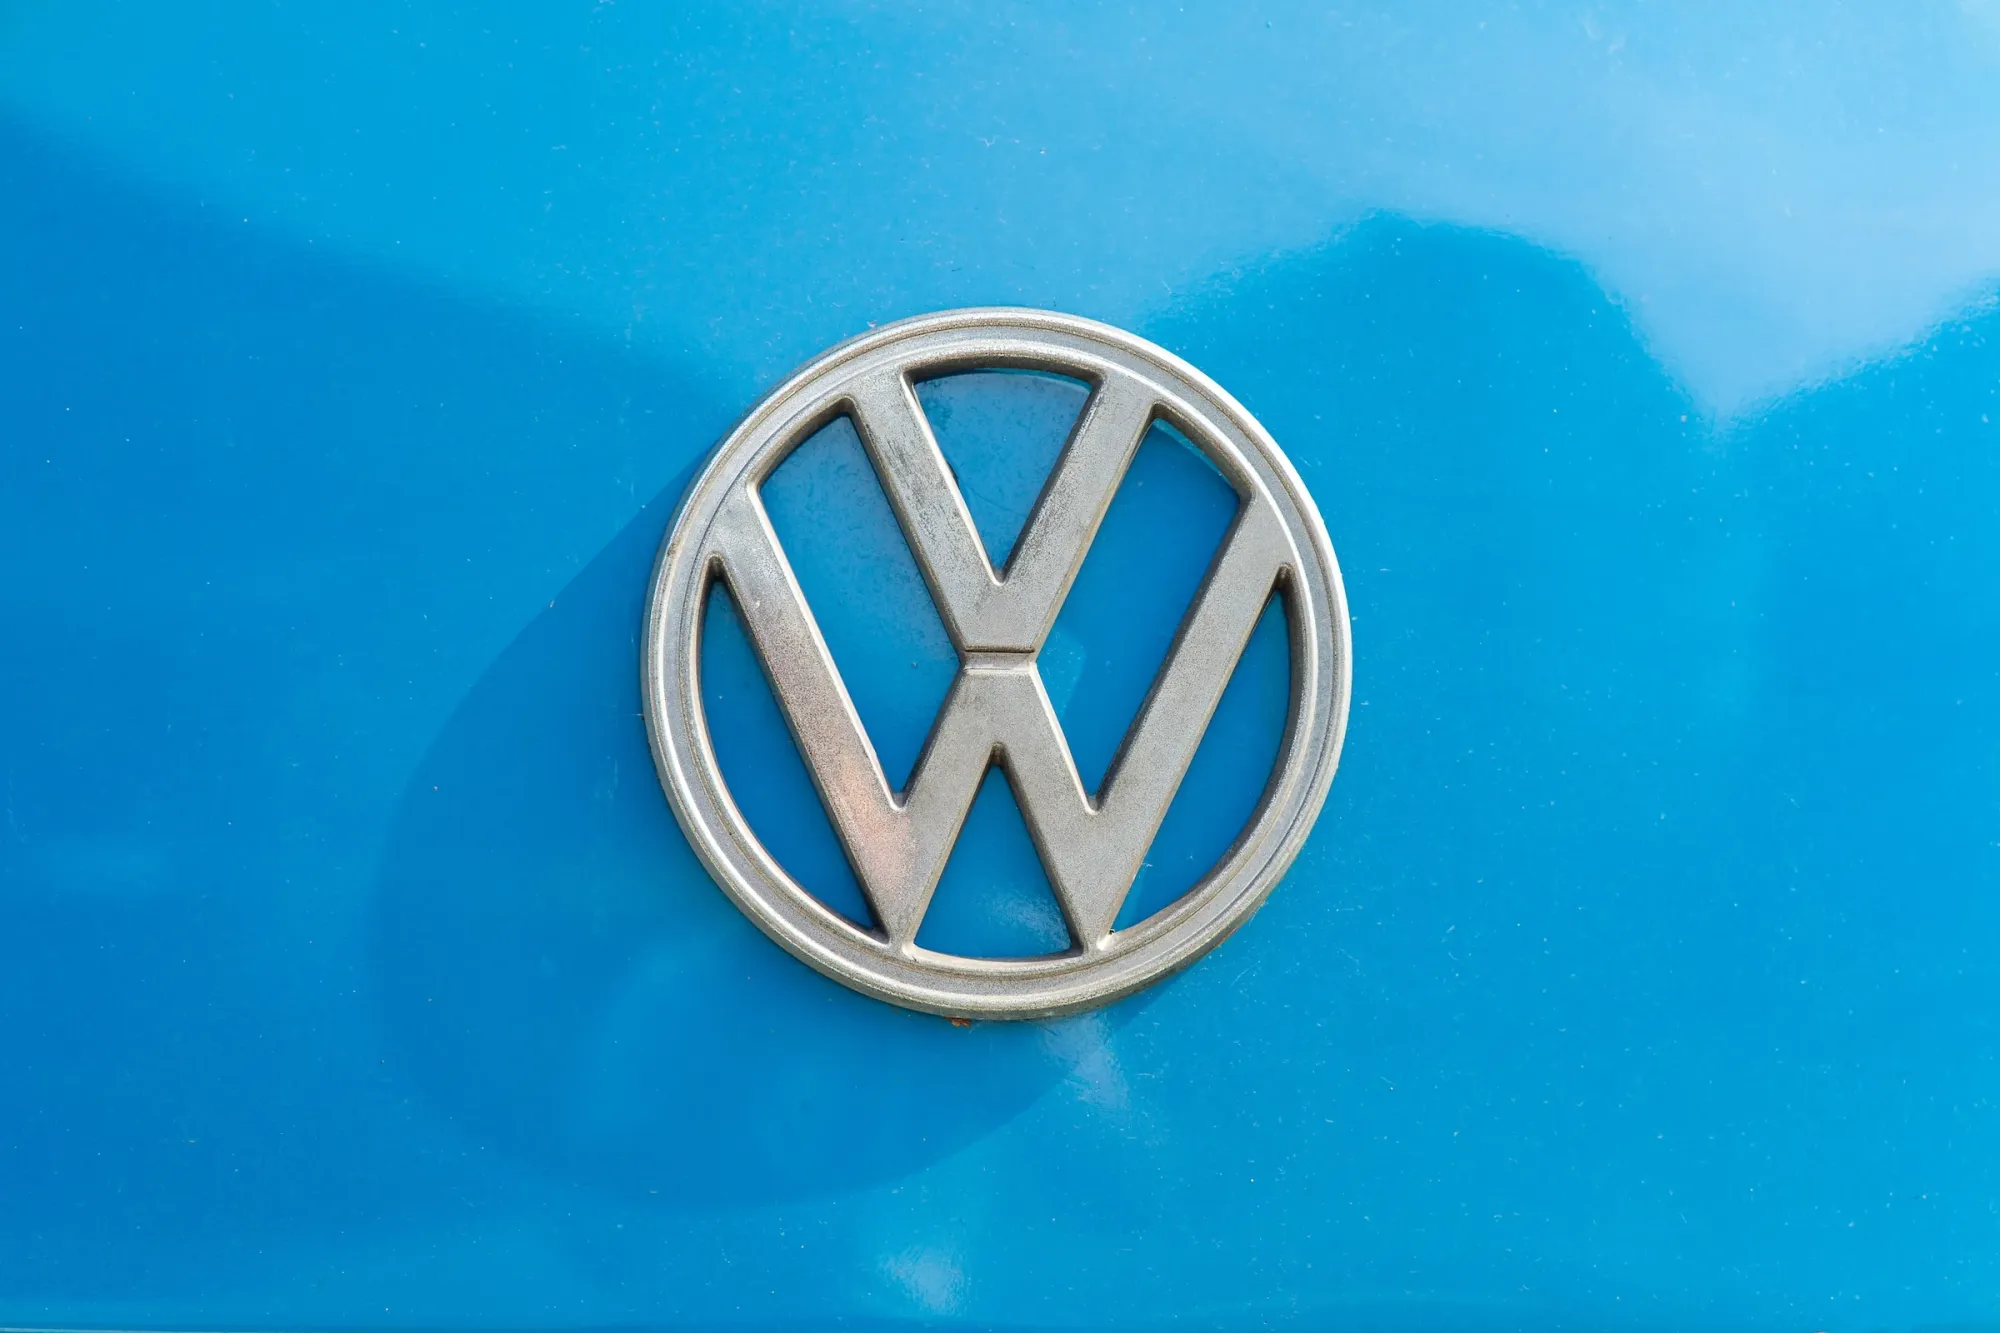 2013 VW Passat SE, 10 years in